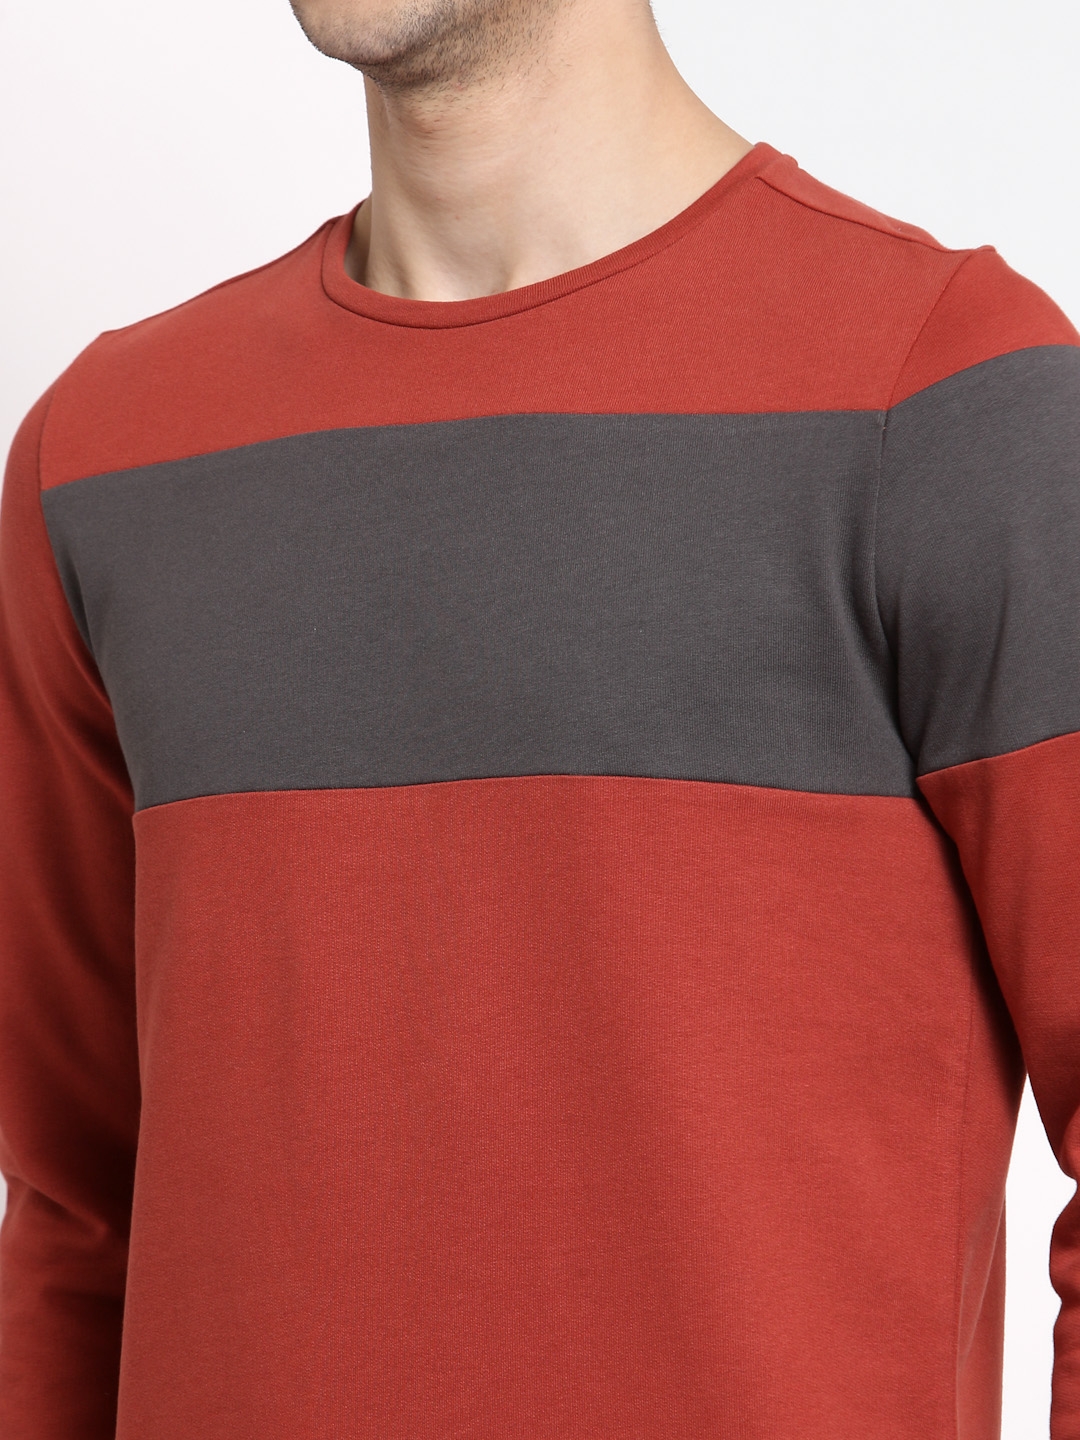 YOONOY | Men's Orange & Grey Cotton Colourblock Sweatshirts 4